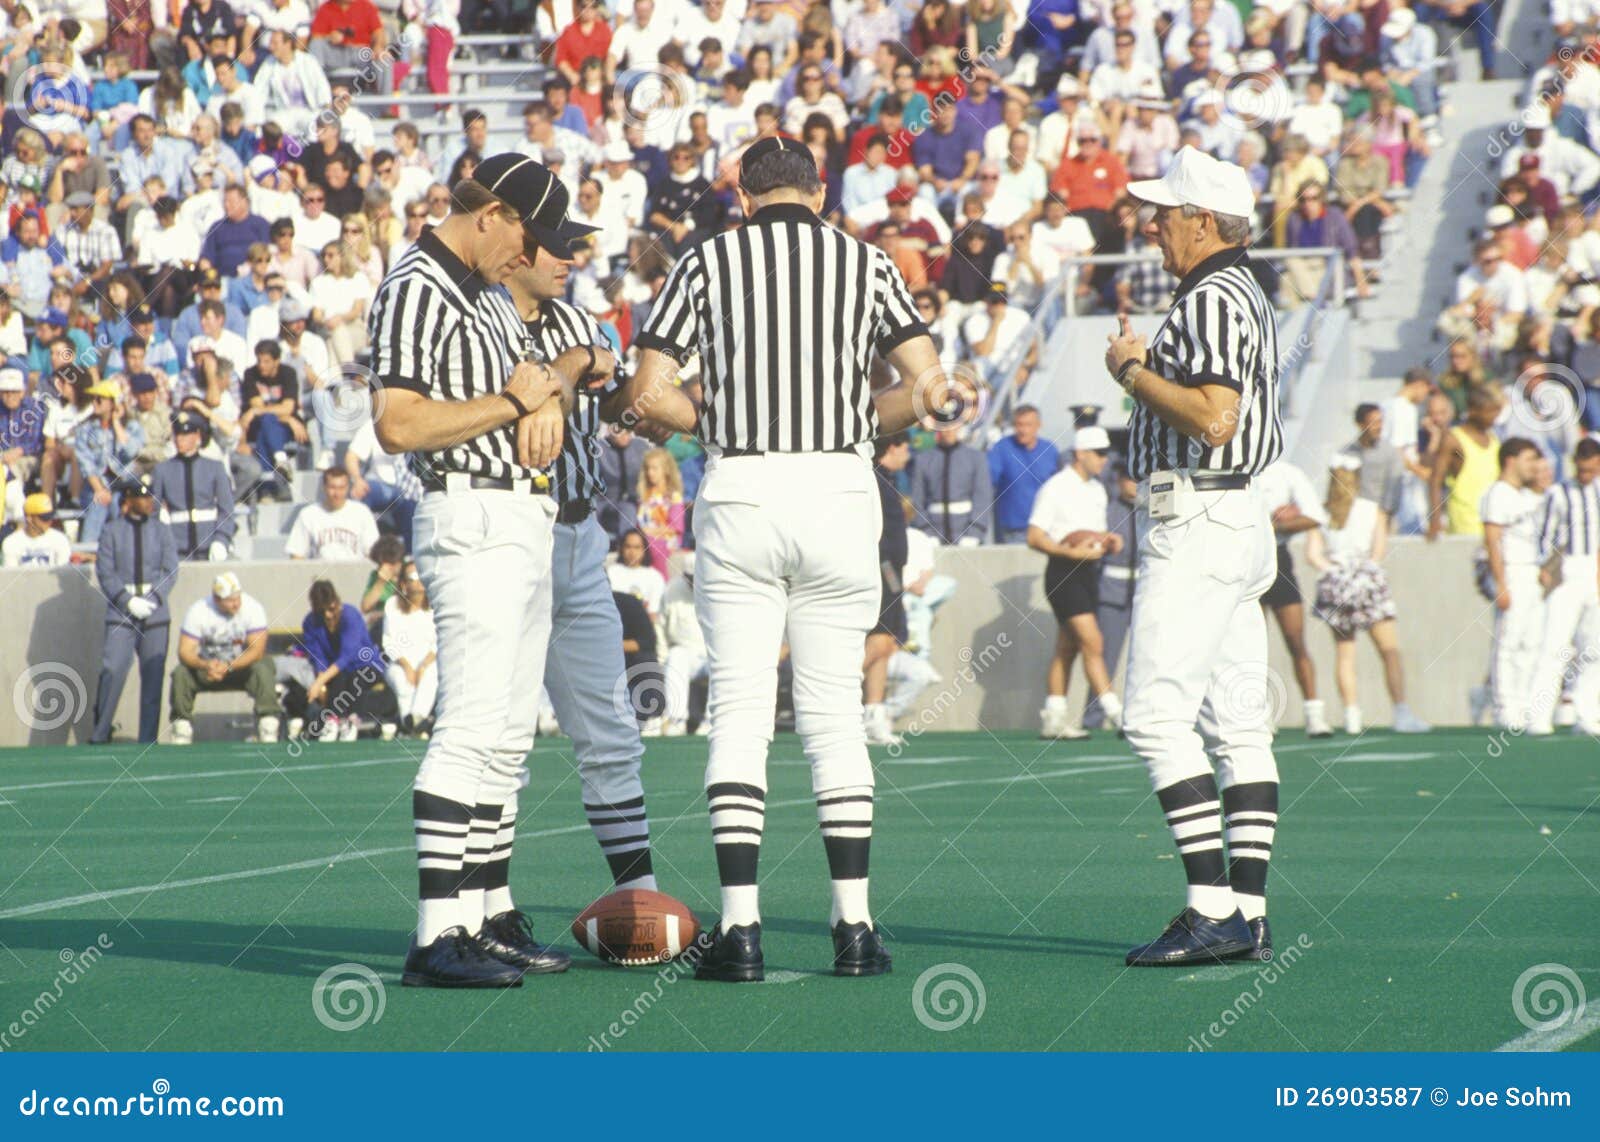 old nfl referee uniforms